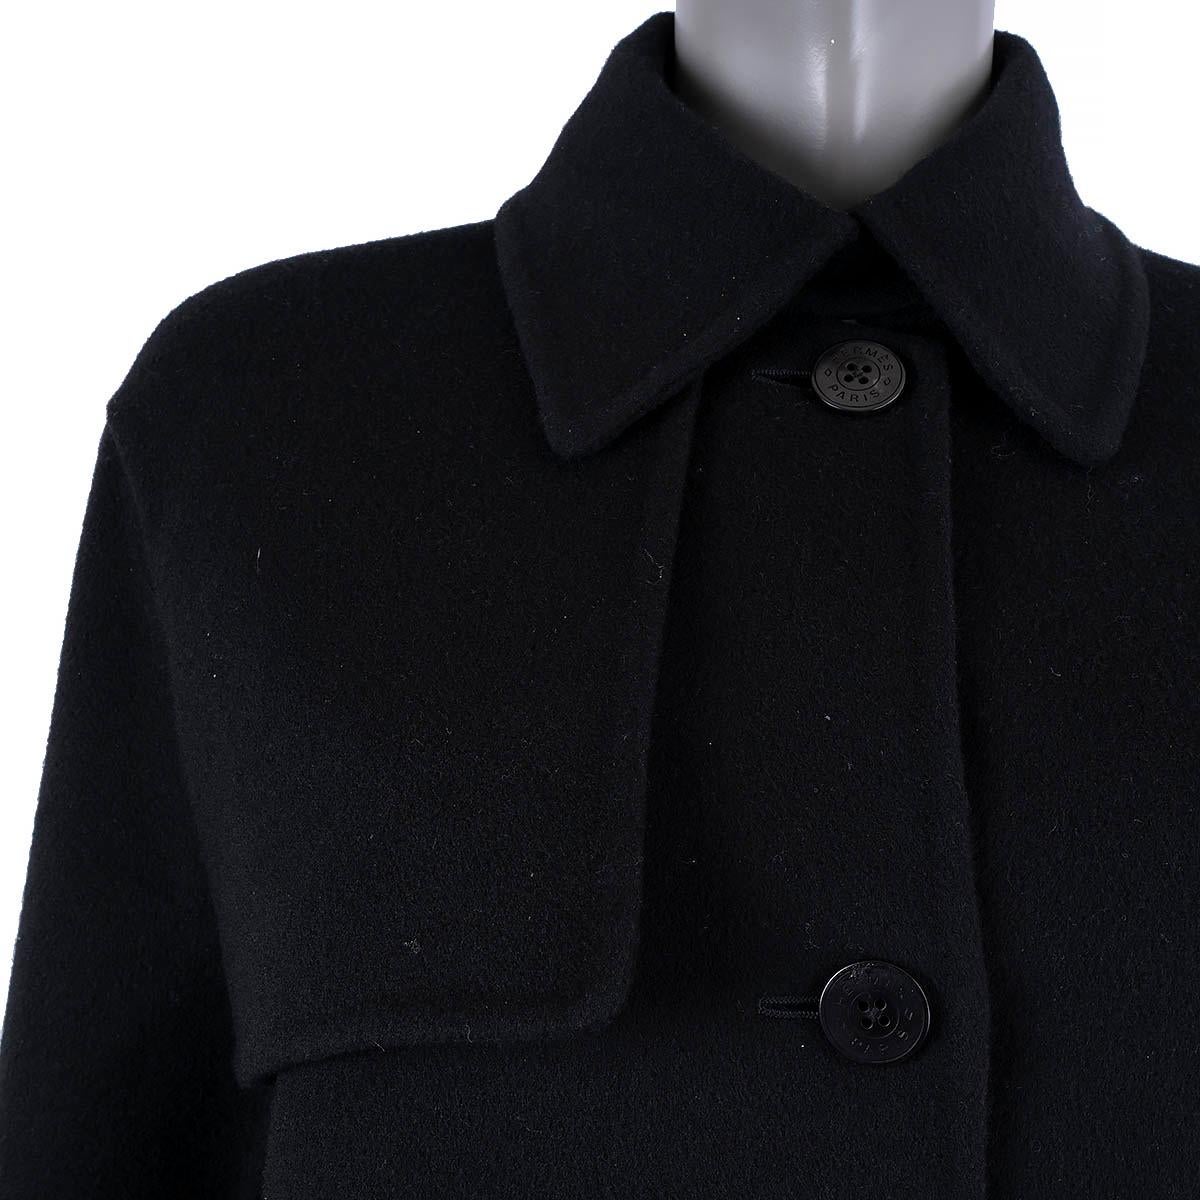 HERMES black cashmere 2020 SUPLE TRENCH Coat Jacket 36 XS 3